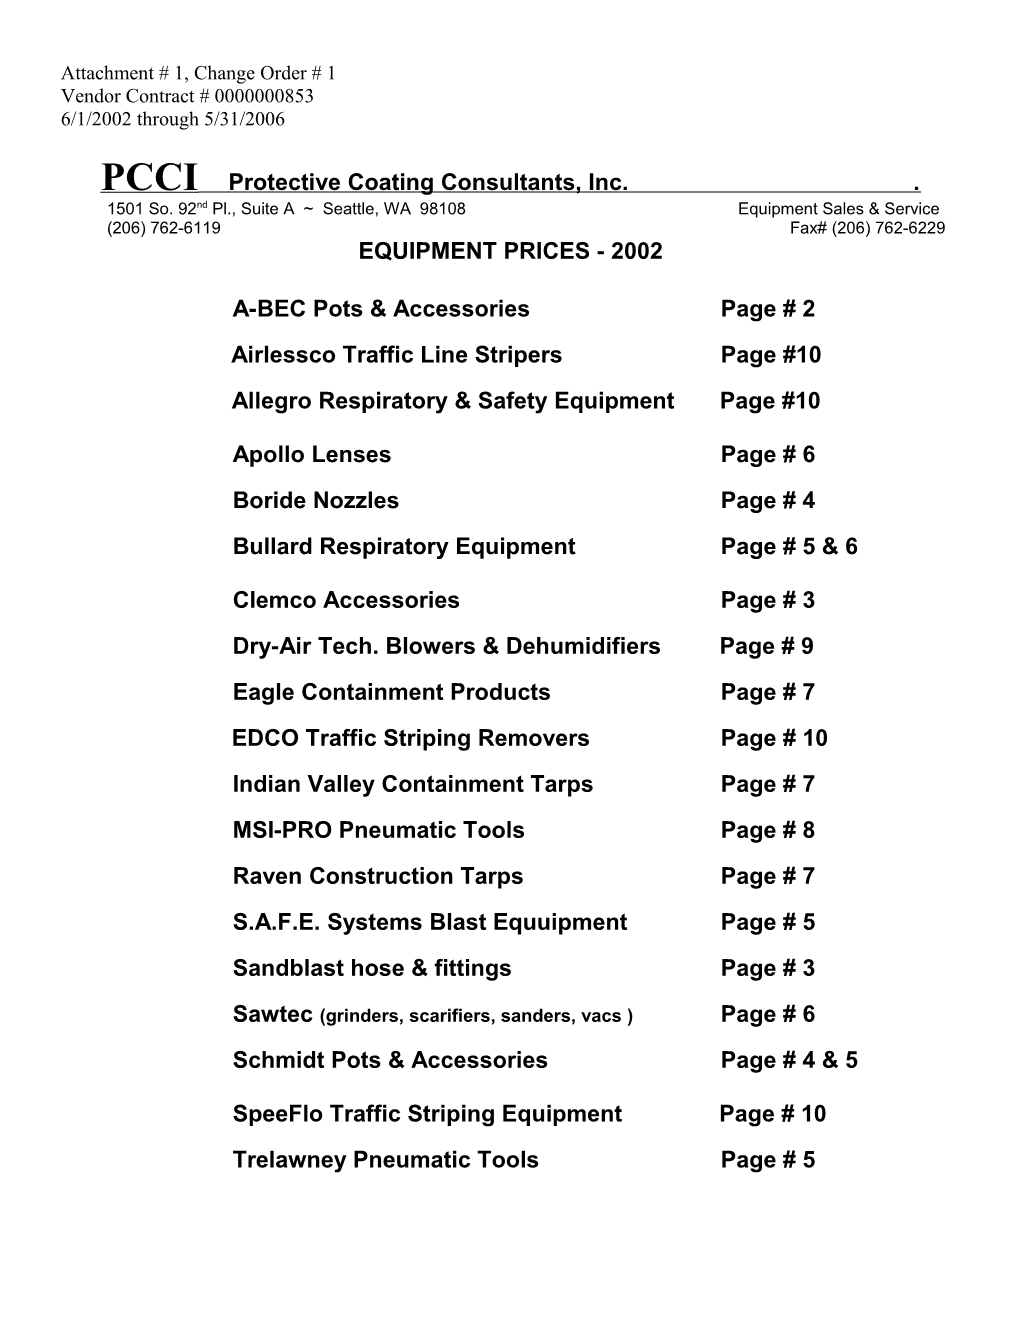 PCCI Protective Coating Consultants, Inc